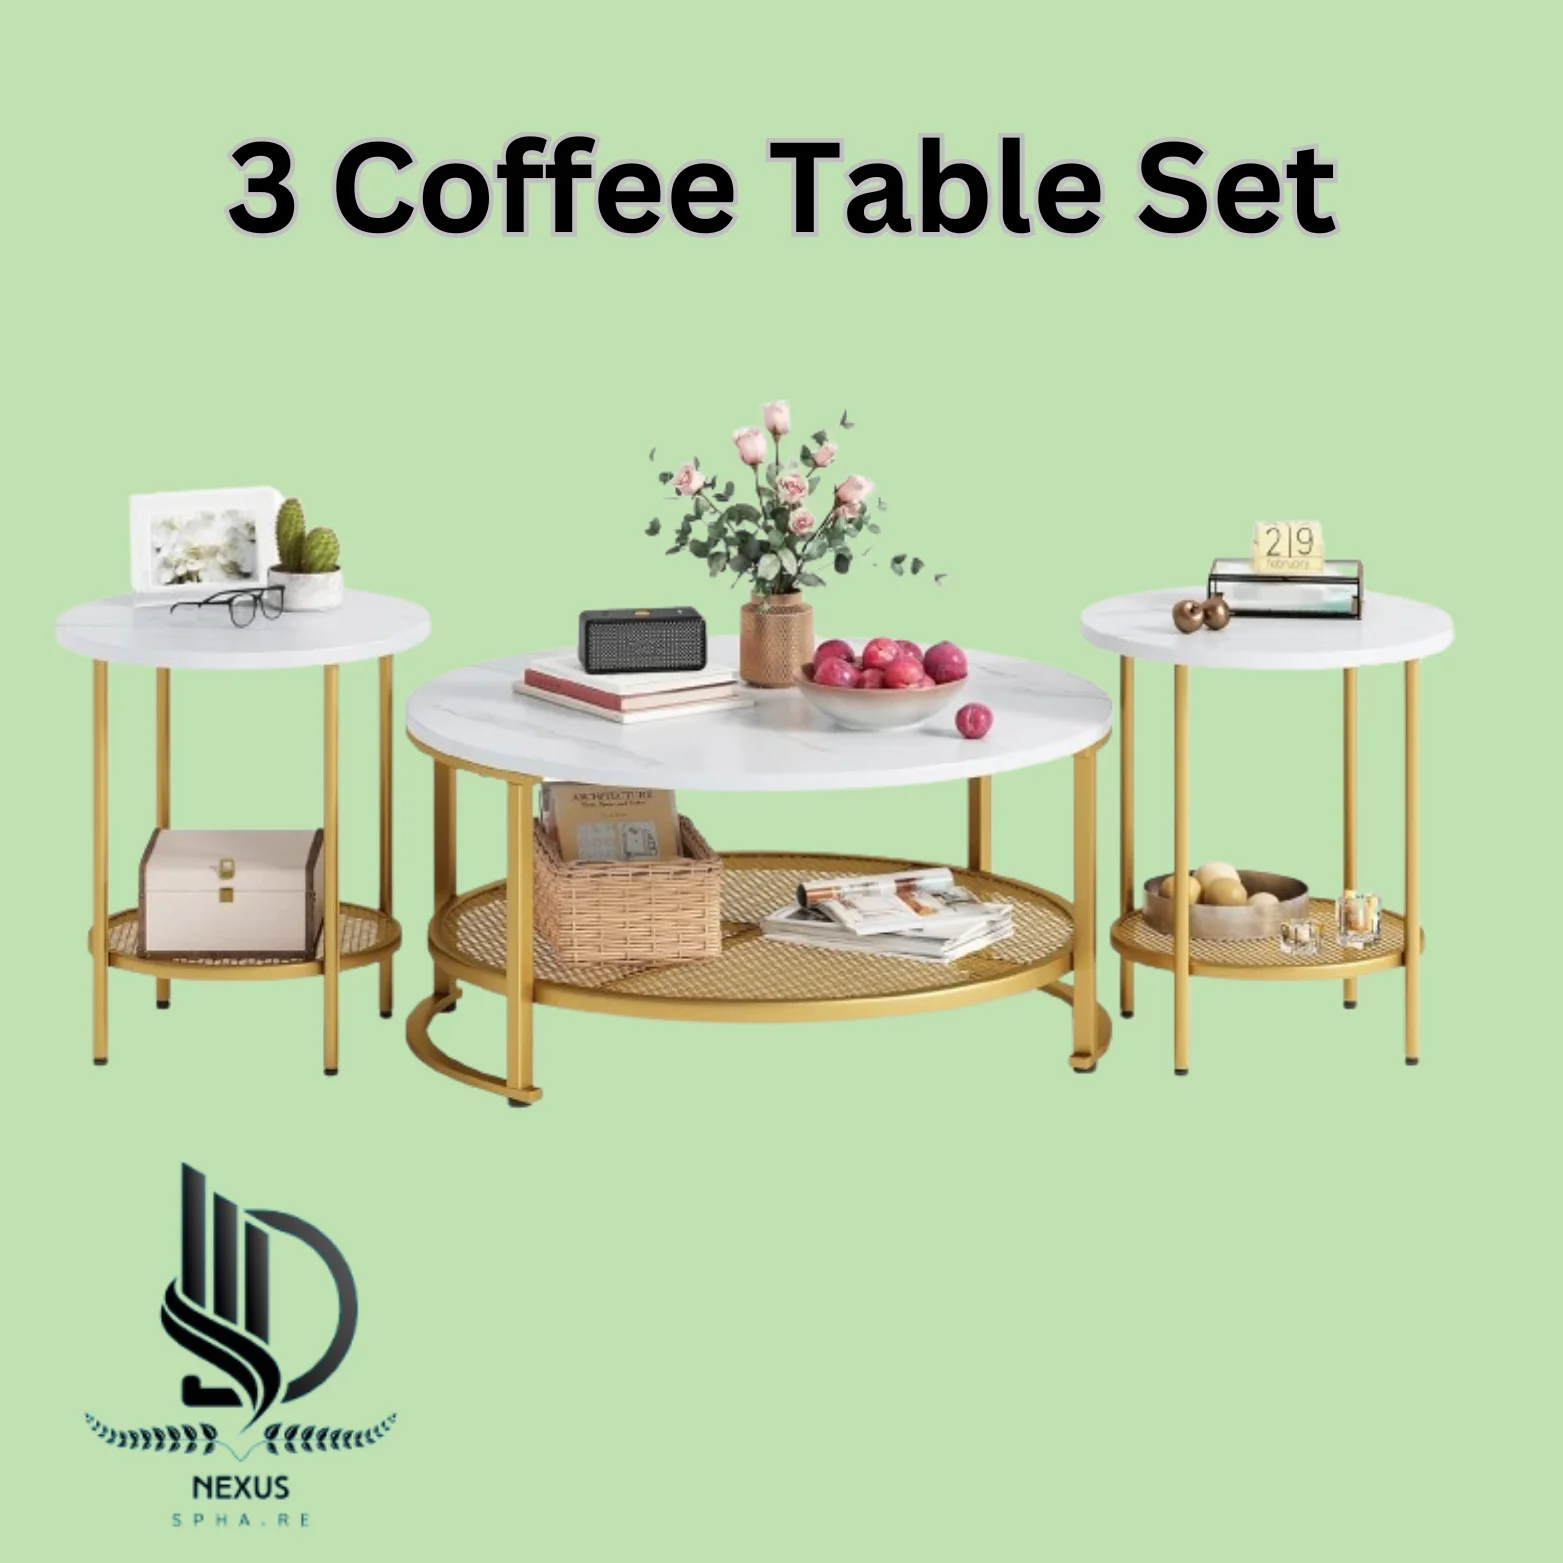 3 Coffee Table Set